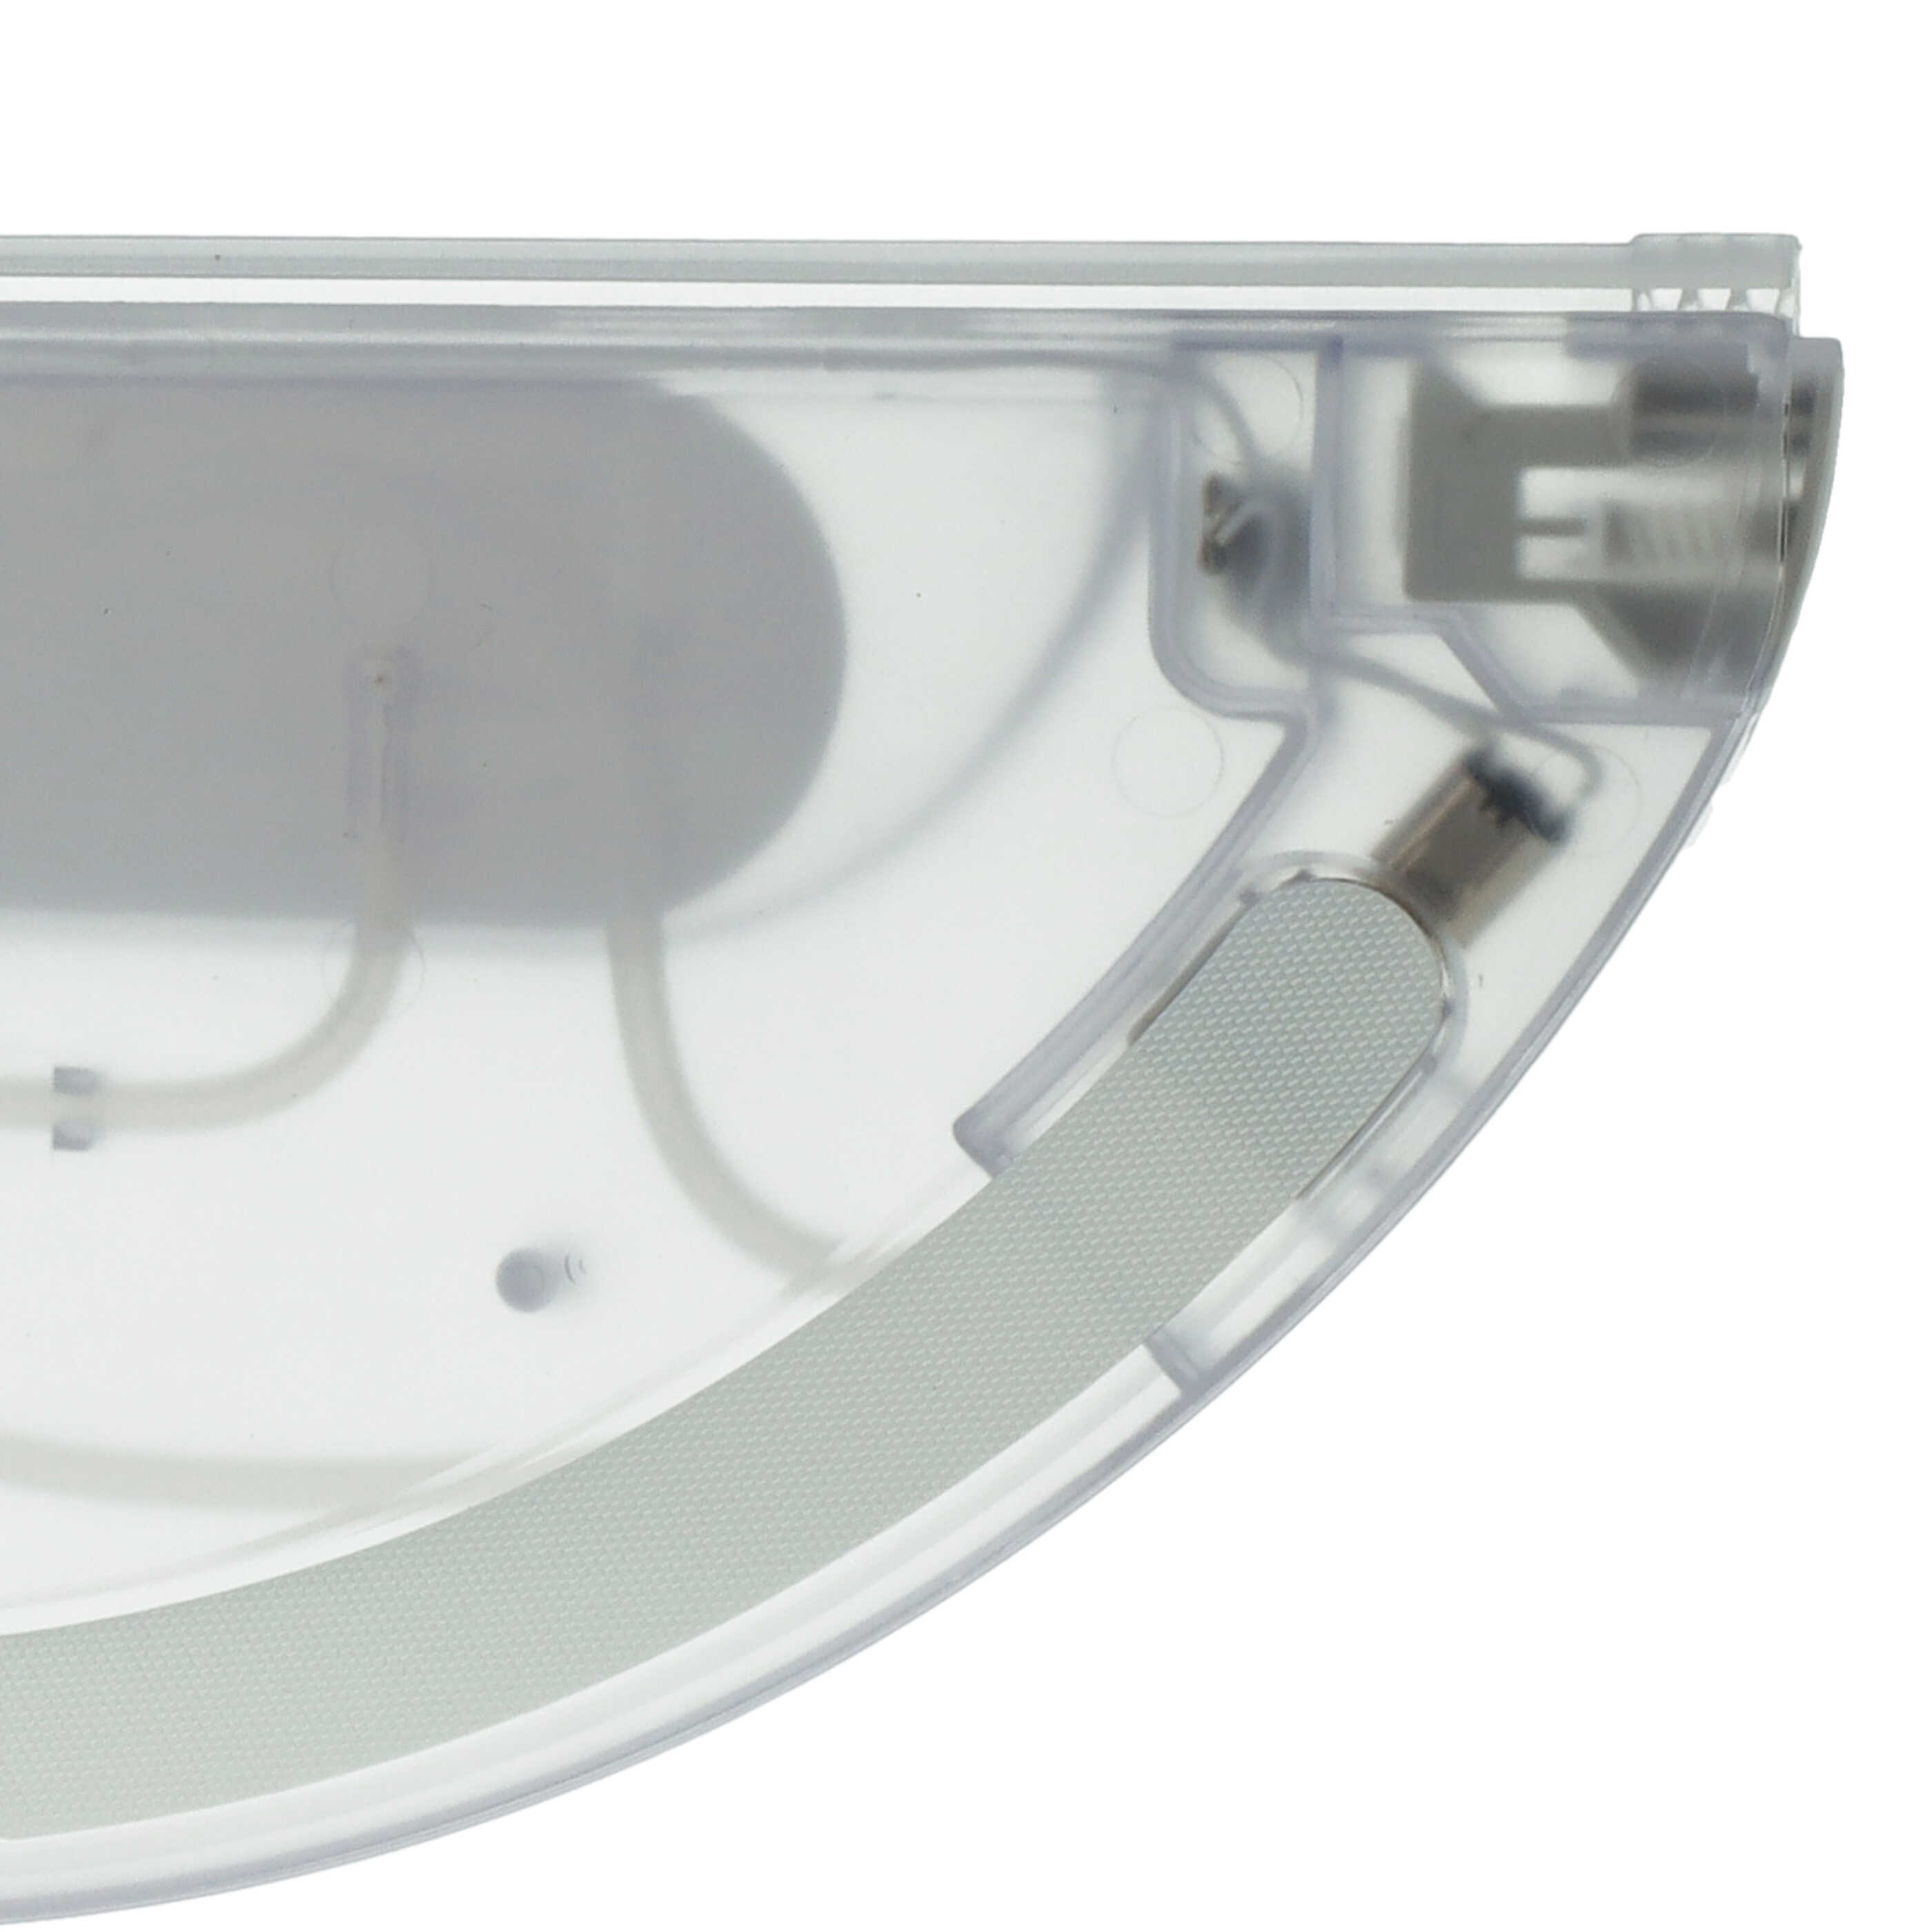 Mop Plate suitable for Xiaomi Mijia 1C Robot Vacuum Cleaner - ABS Plastic, transparent